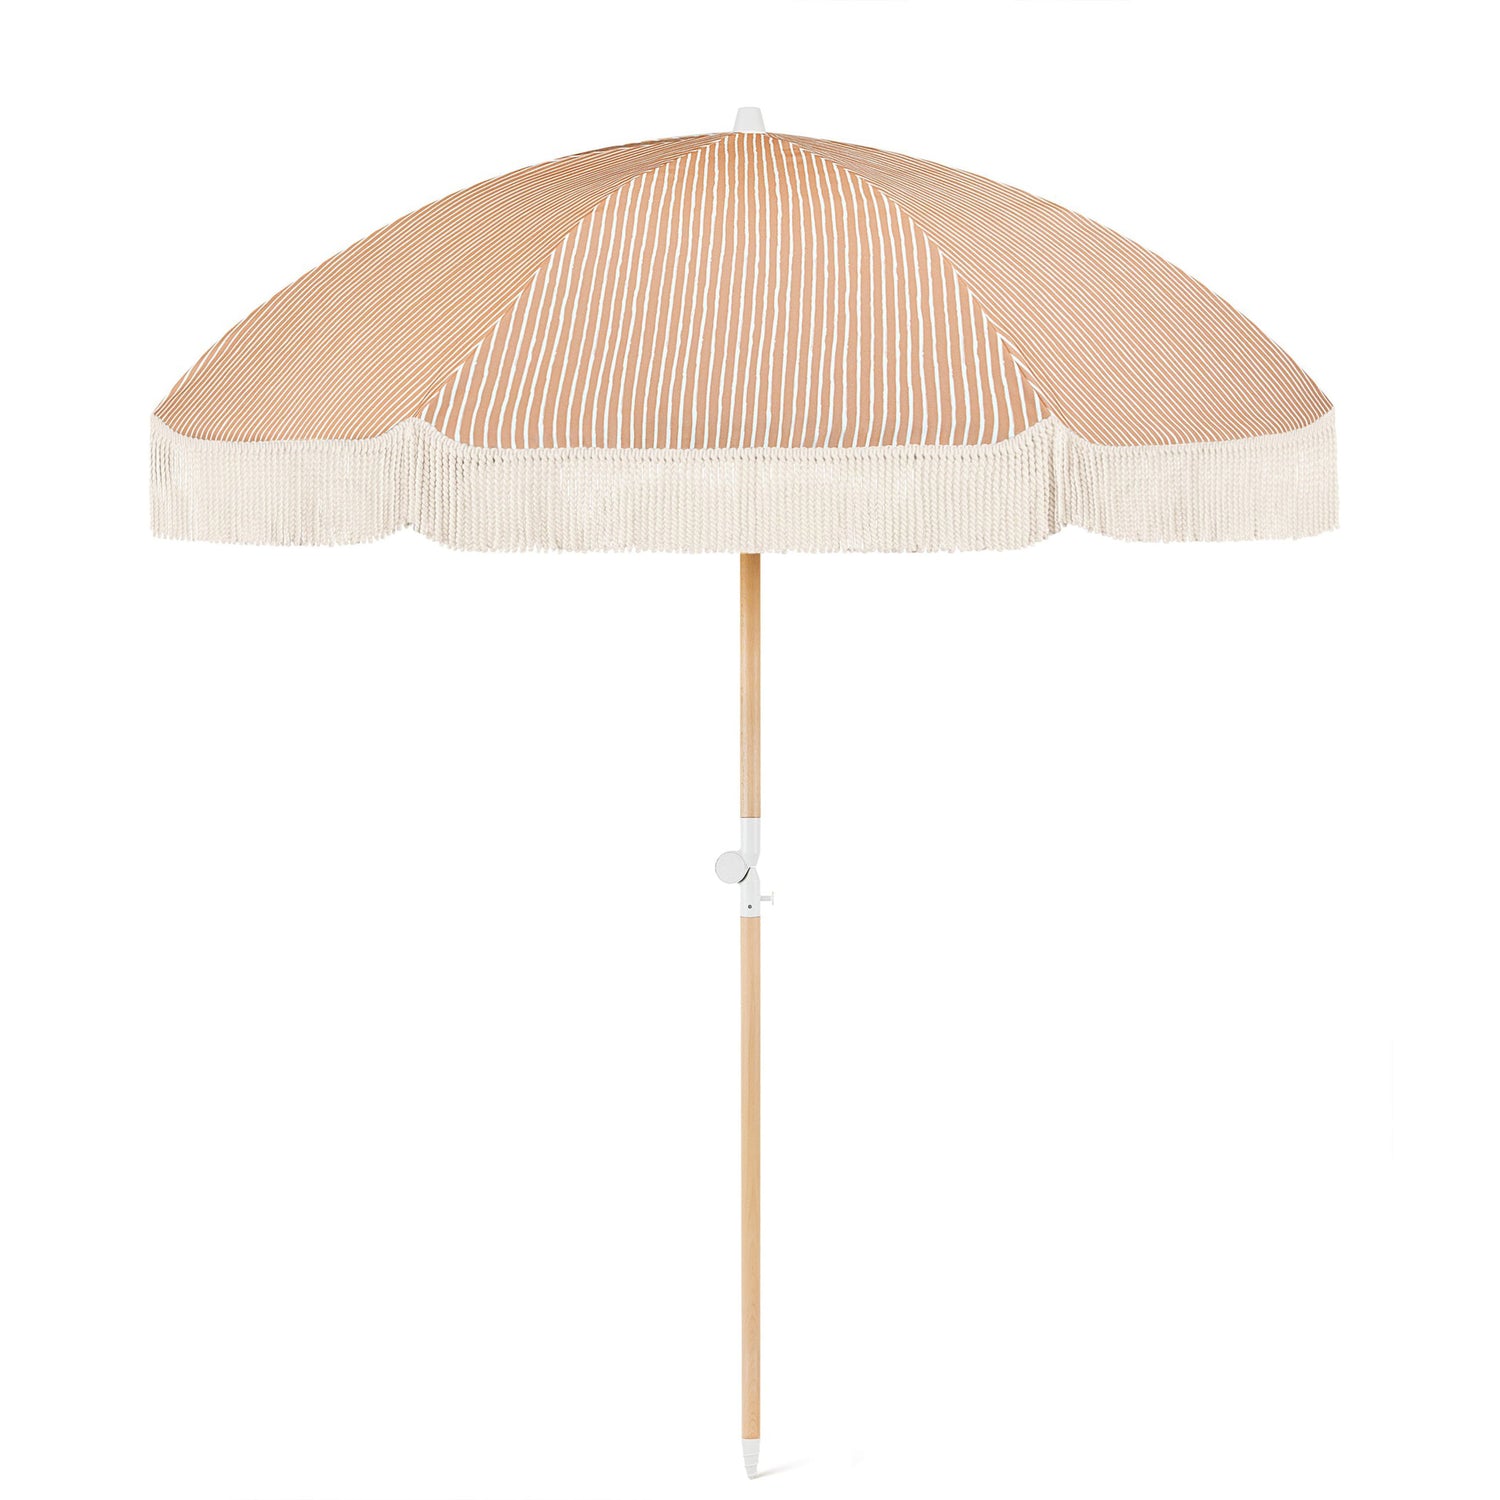 Sunday Supply Co Beach Umbrella